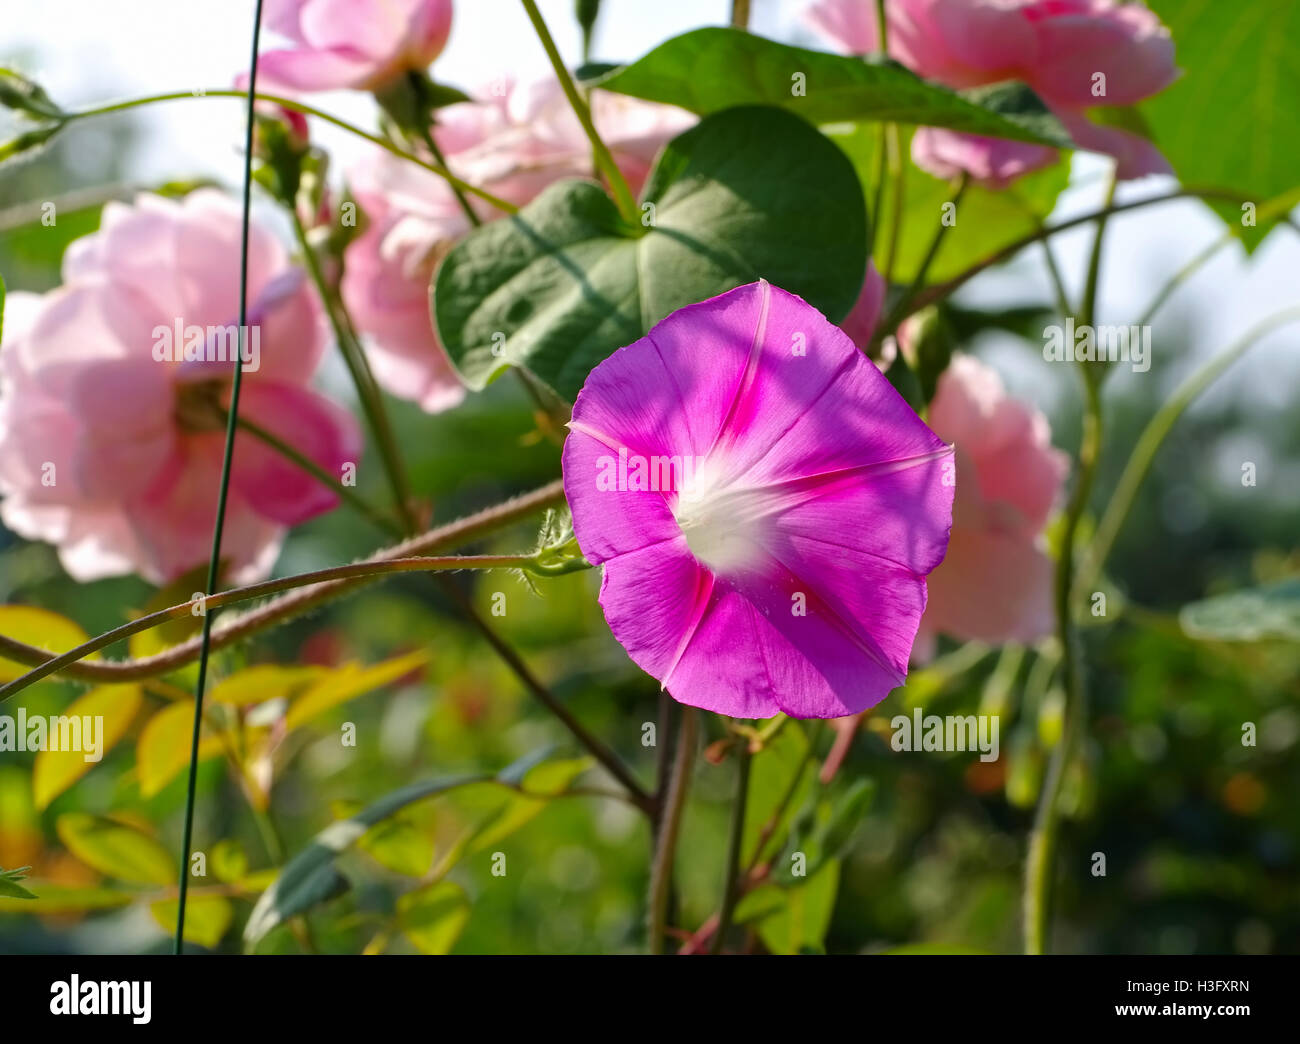 Prunkwinde am Holzzaun - Ipomoea tricolor flower in summer garden Stock Photo